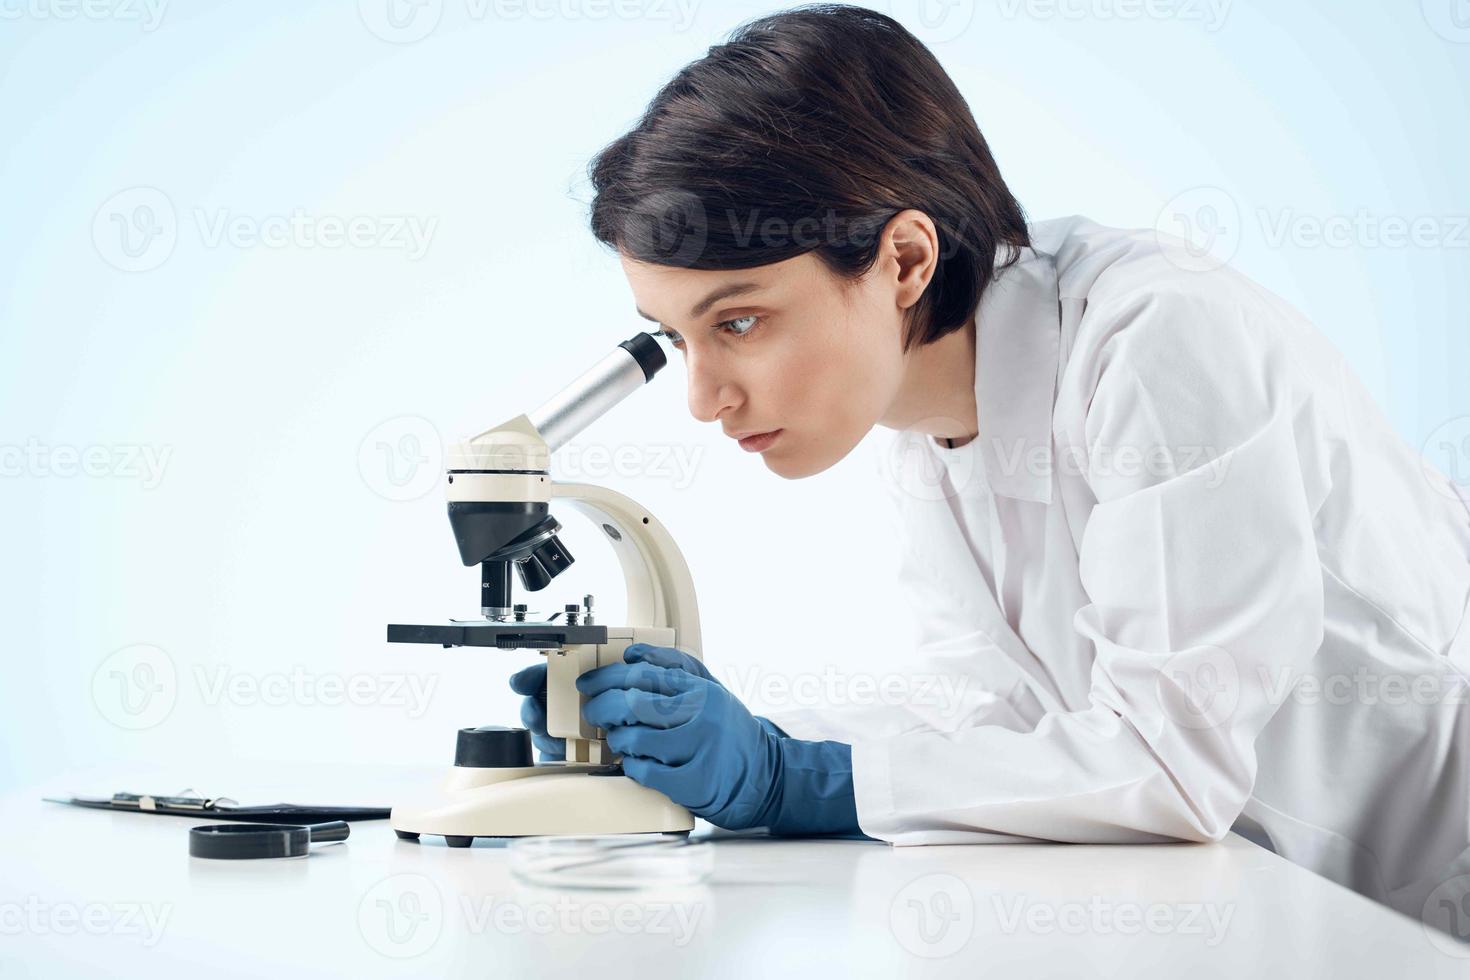 femme dans laboratoire microscope science recherche une analyse photo